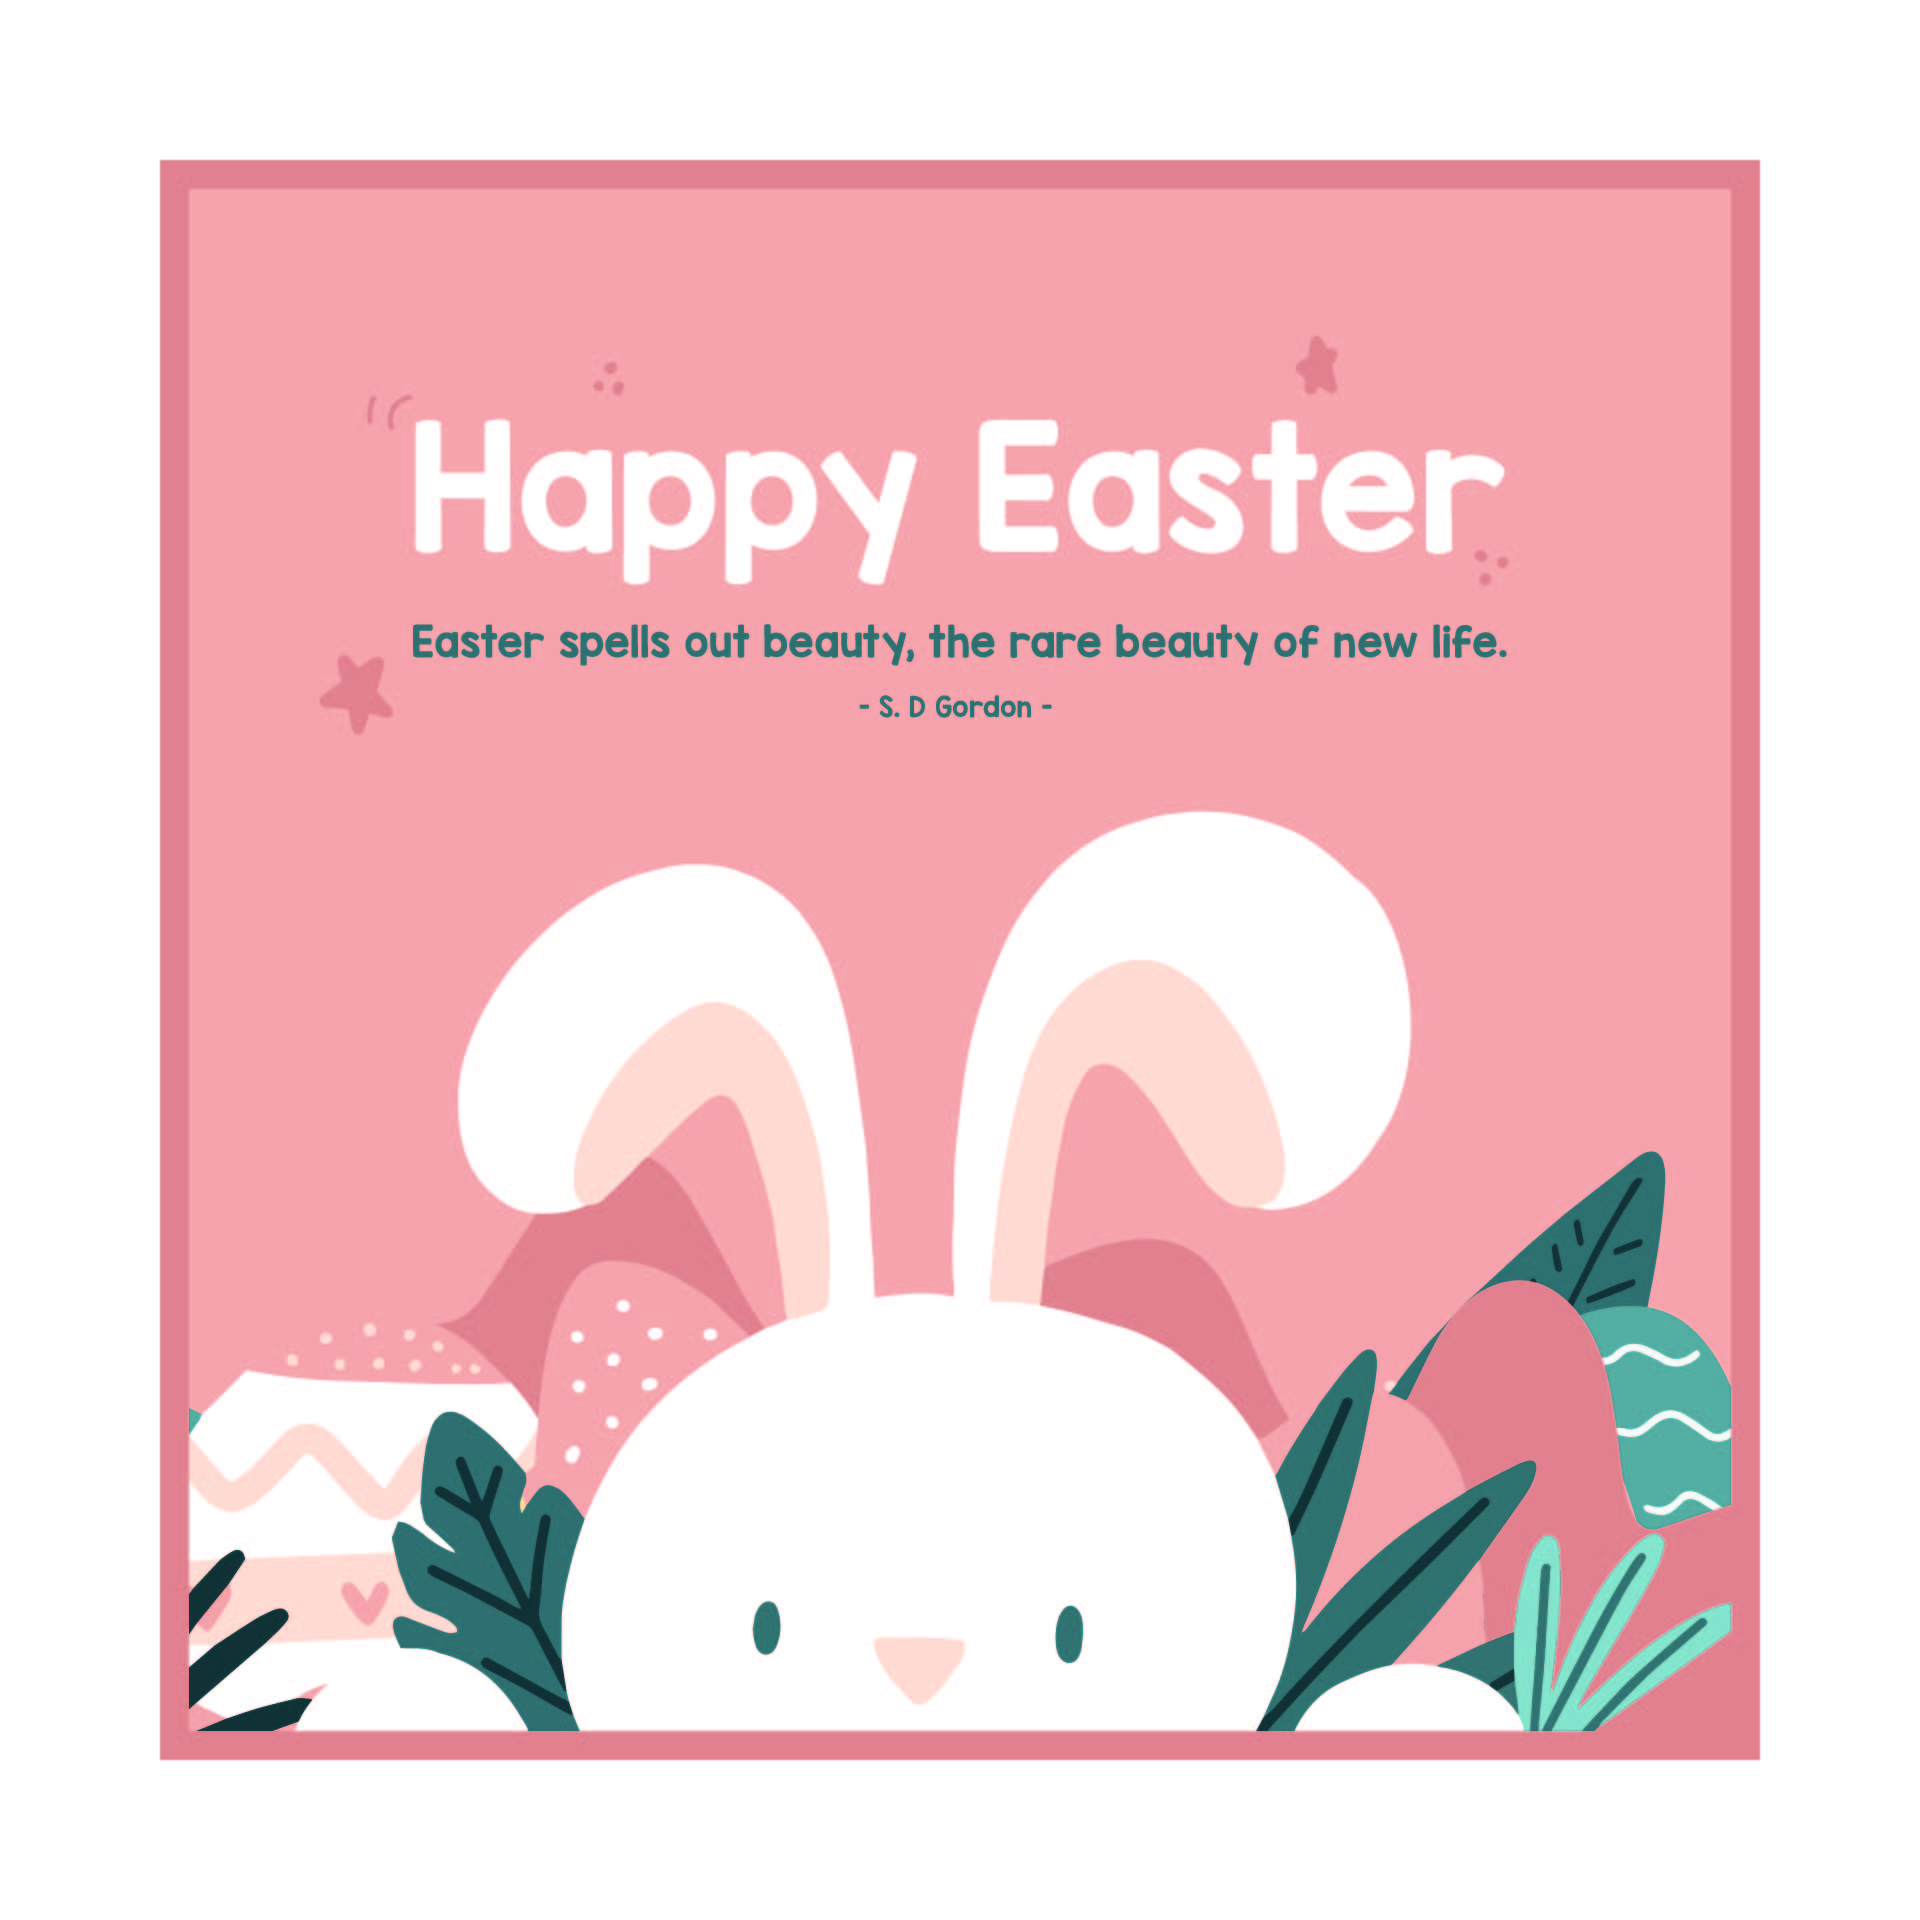 Printable Easter Card